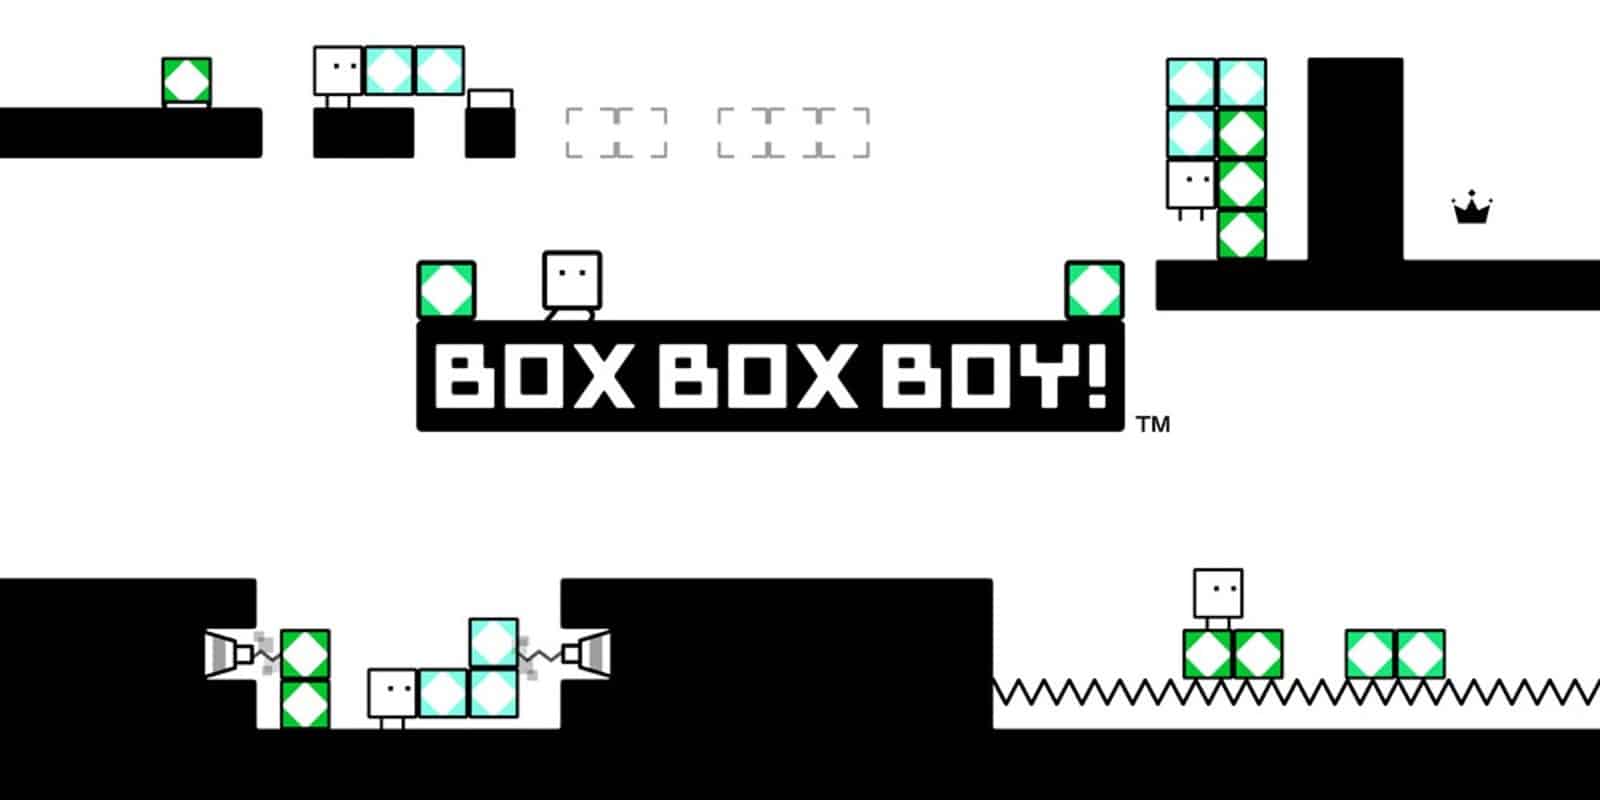 BoxBoxBoy! player count stats